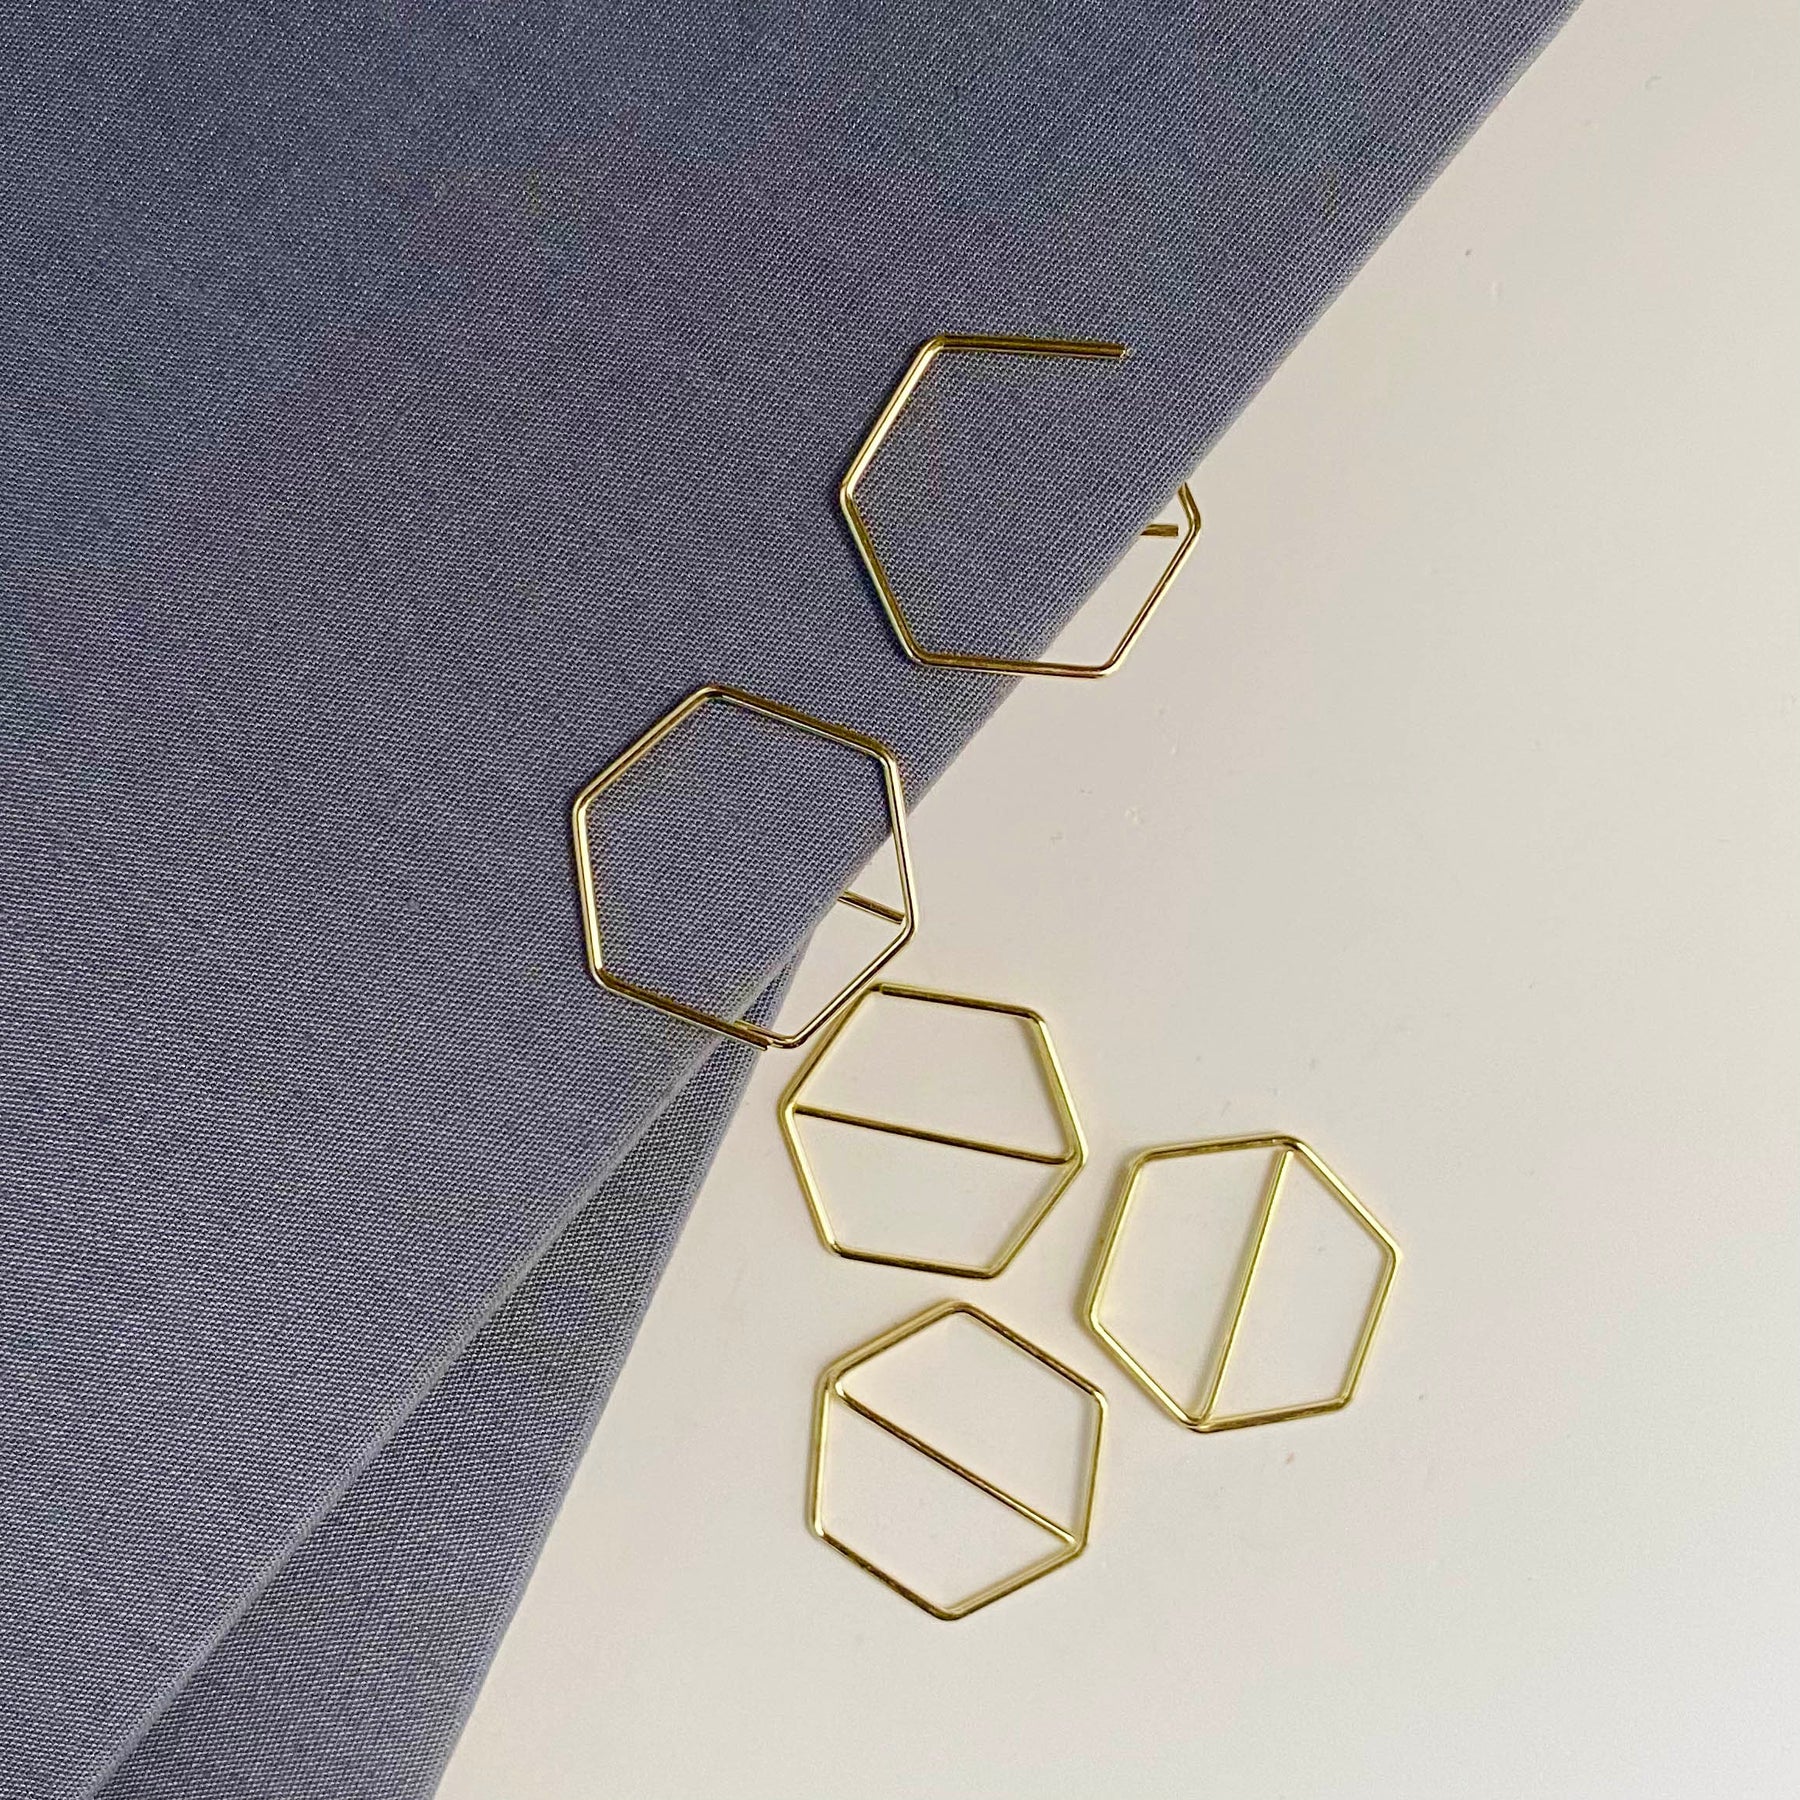 Gold Hexagon Paper Clips - 20 pcs